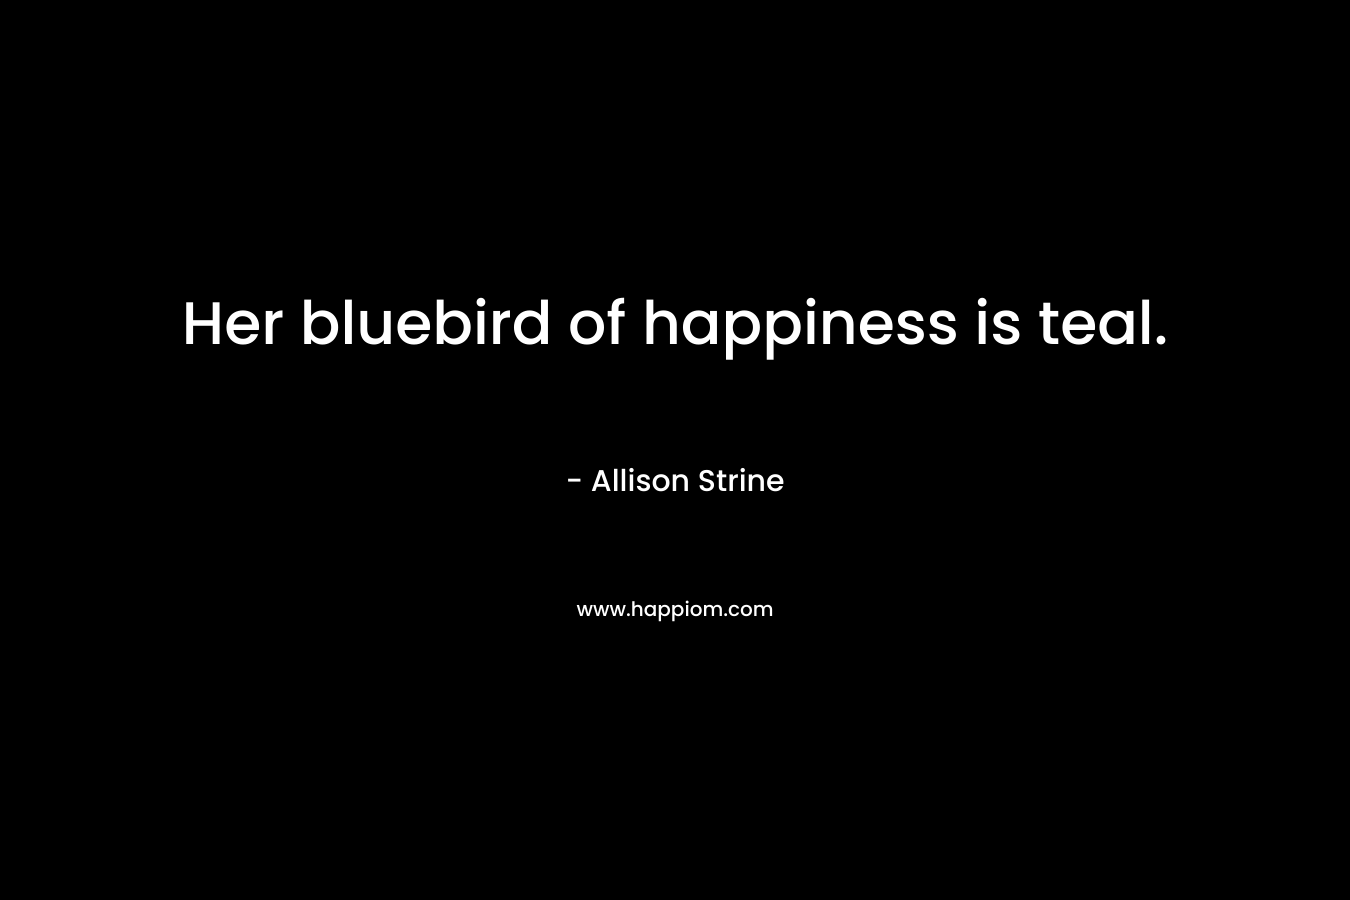 Her bluebird of happiness is teal. – Allison Strine